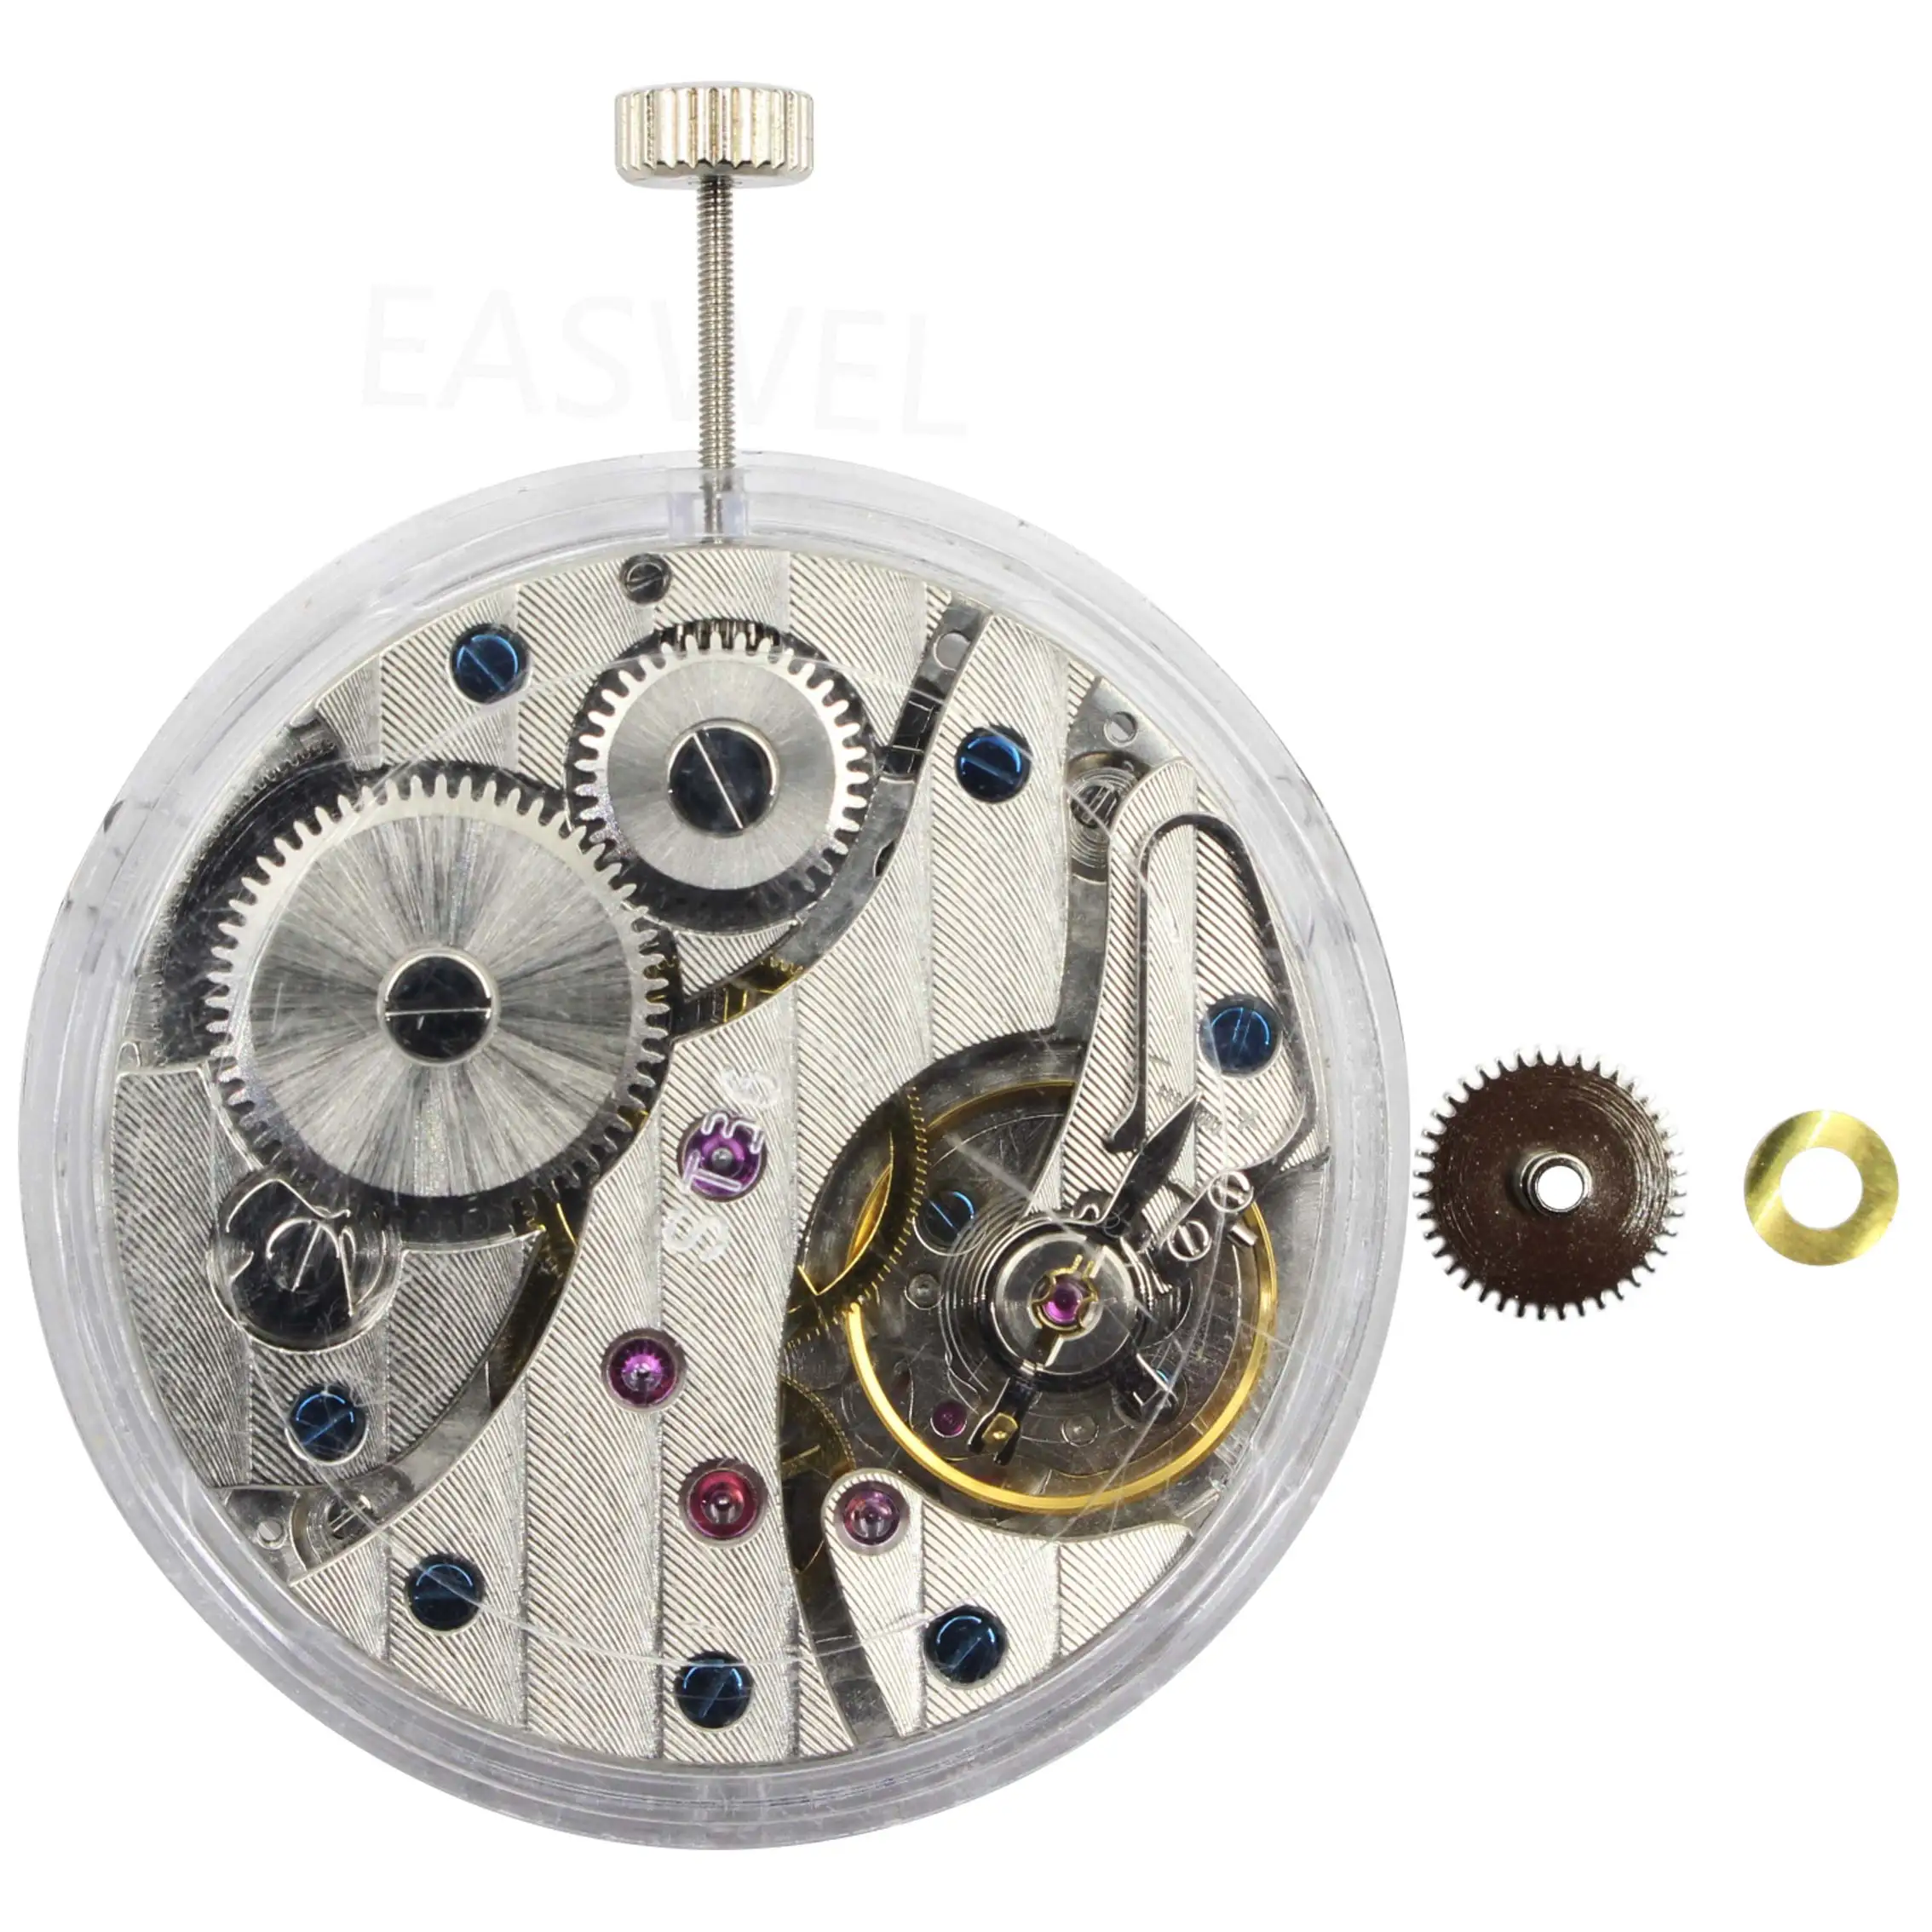 17Jewels ST36 Mechanical Movement for Wristwatch Hand Winding 6497 Watch